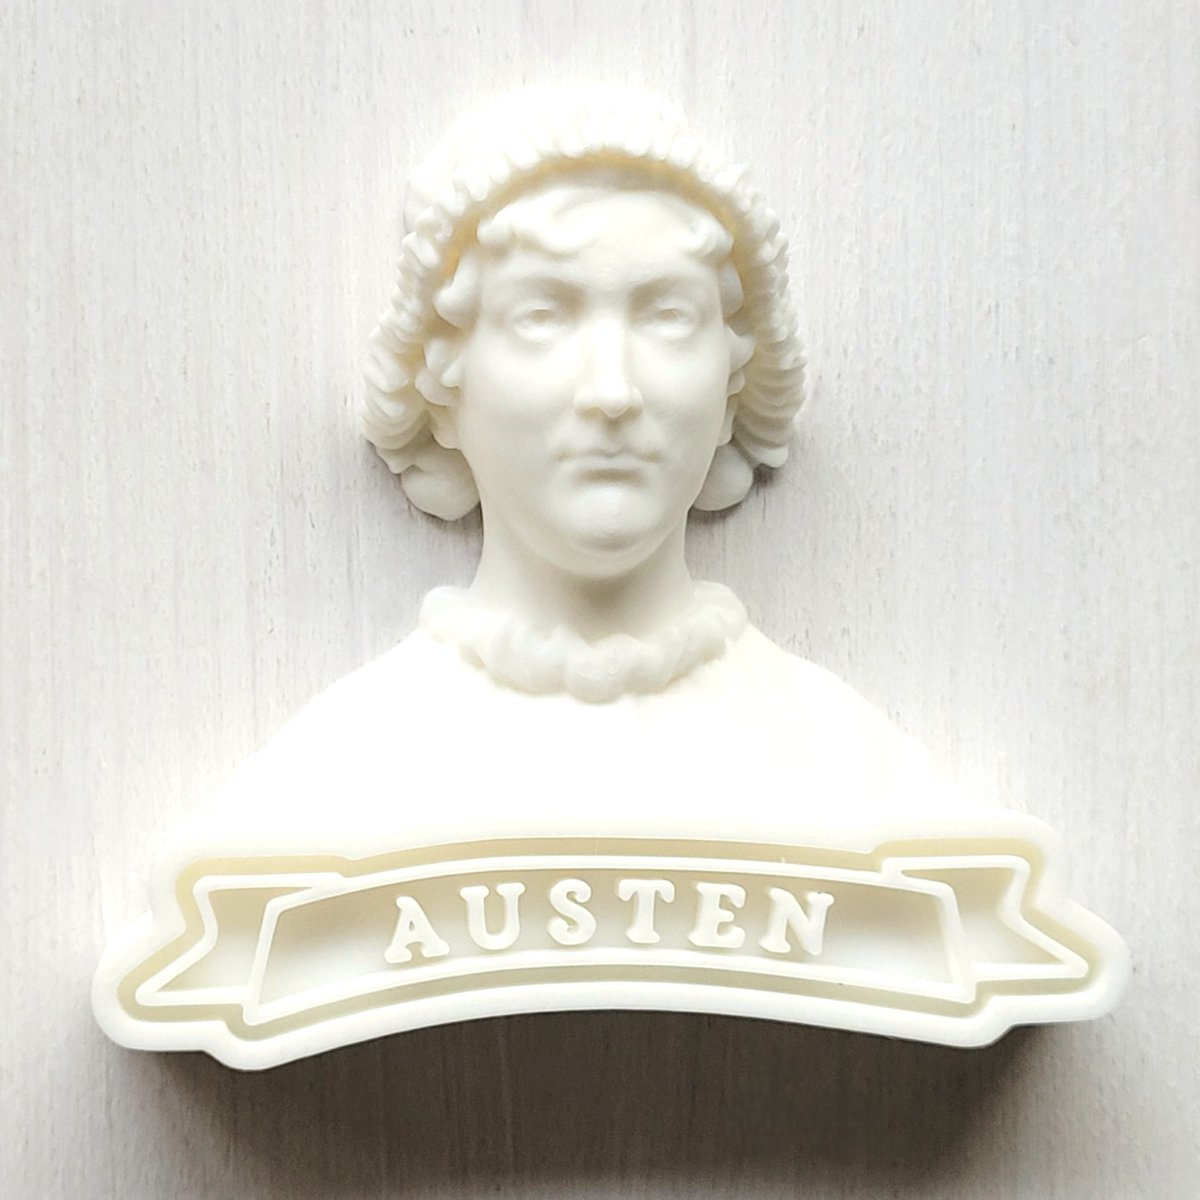 Excited to share the latest addition to my #etsy shop: Jane Austen 3D Printed Fridge Magnet Gift For Literary Lovers
etsy.me/4b8LBdc
#janeausten #prideandprejudice #sanditon #literarygifts #giftsforfriend #giftforjaneites #janeaustengifts #etsyseller #etsyshop #shopsmall